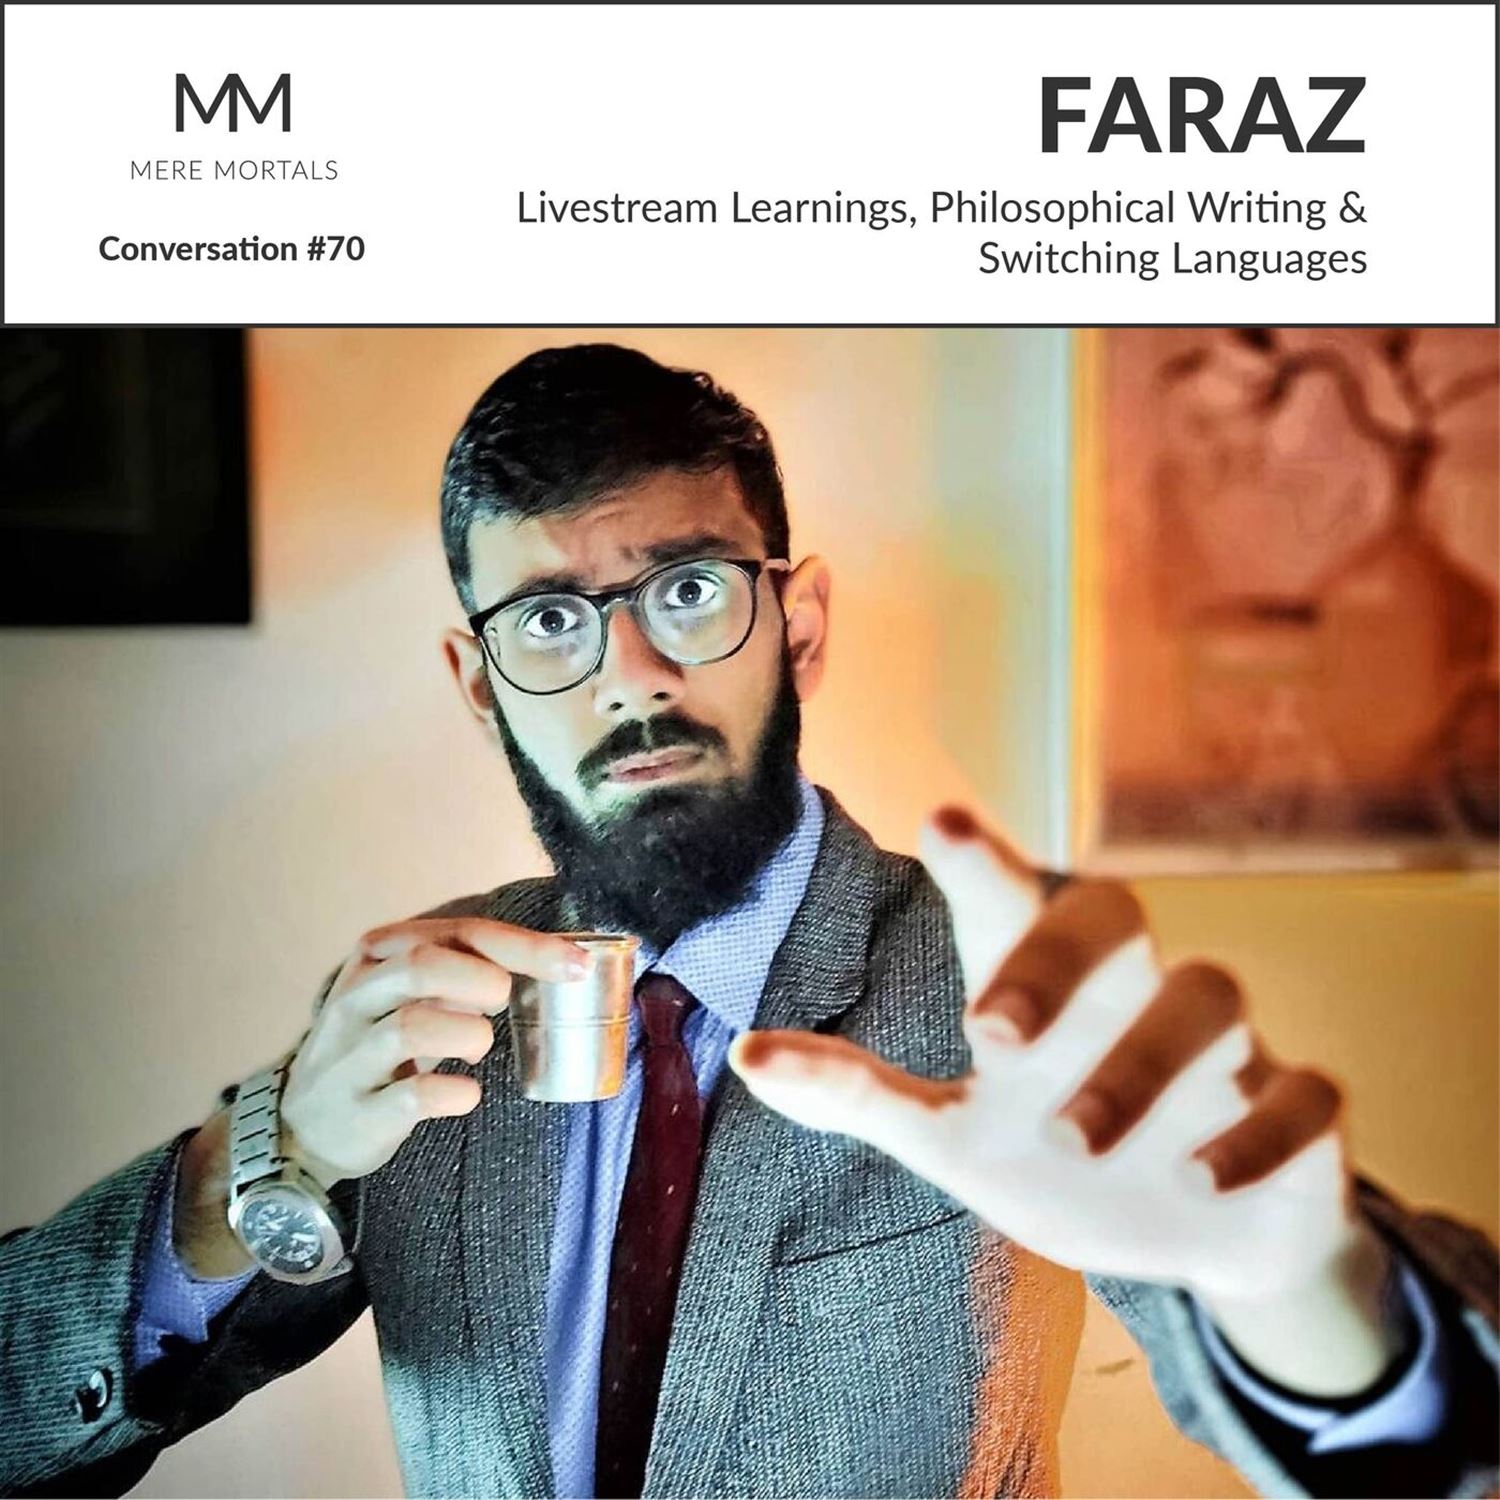 FARAZ | Livestream Learnings, Philosophical Writing & Switching Languages